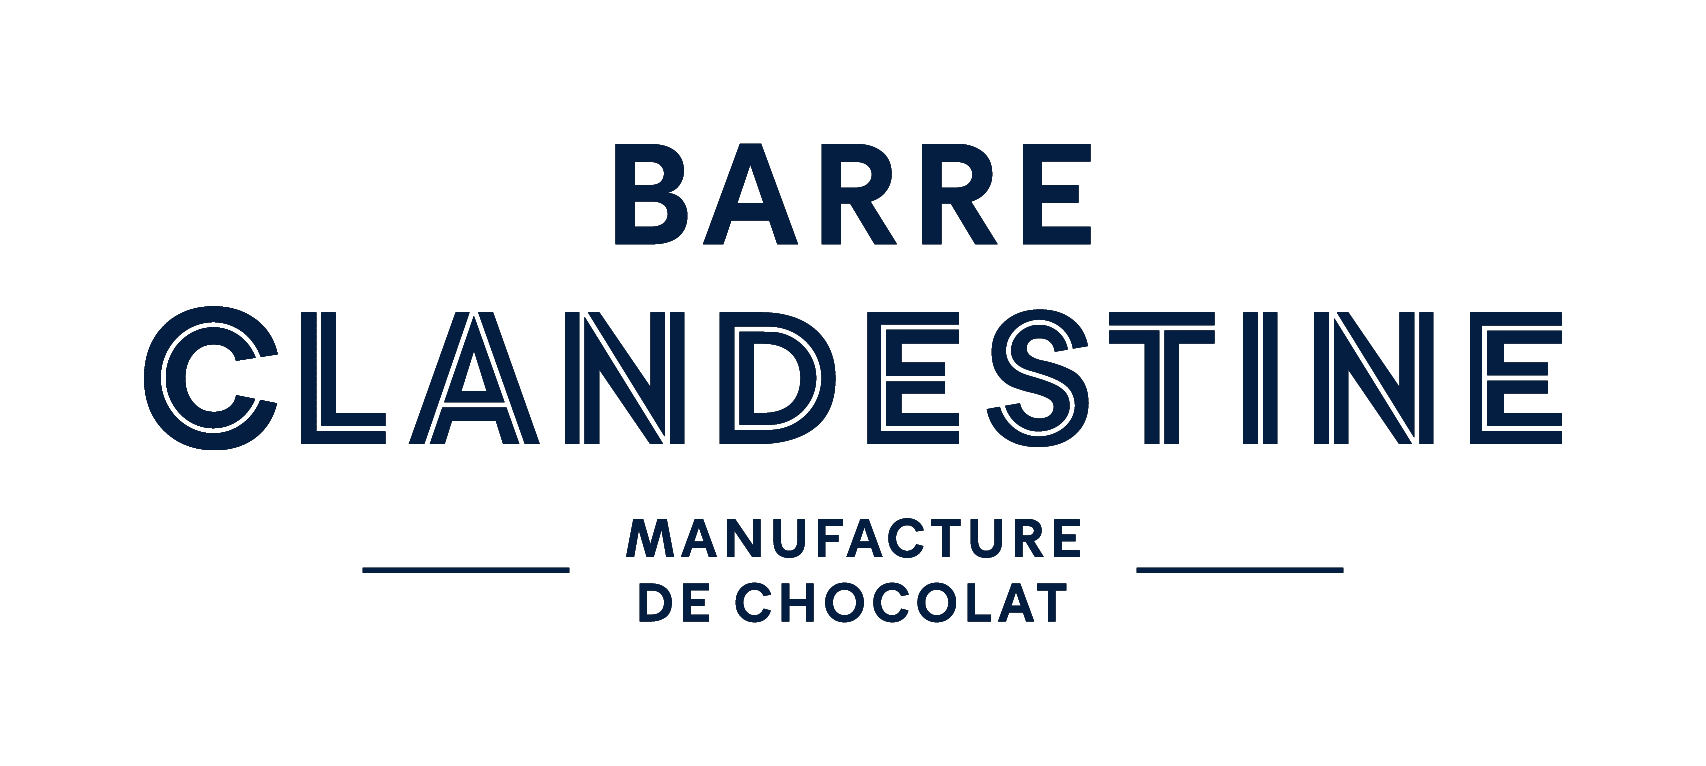 barre clandestine chocolat